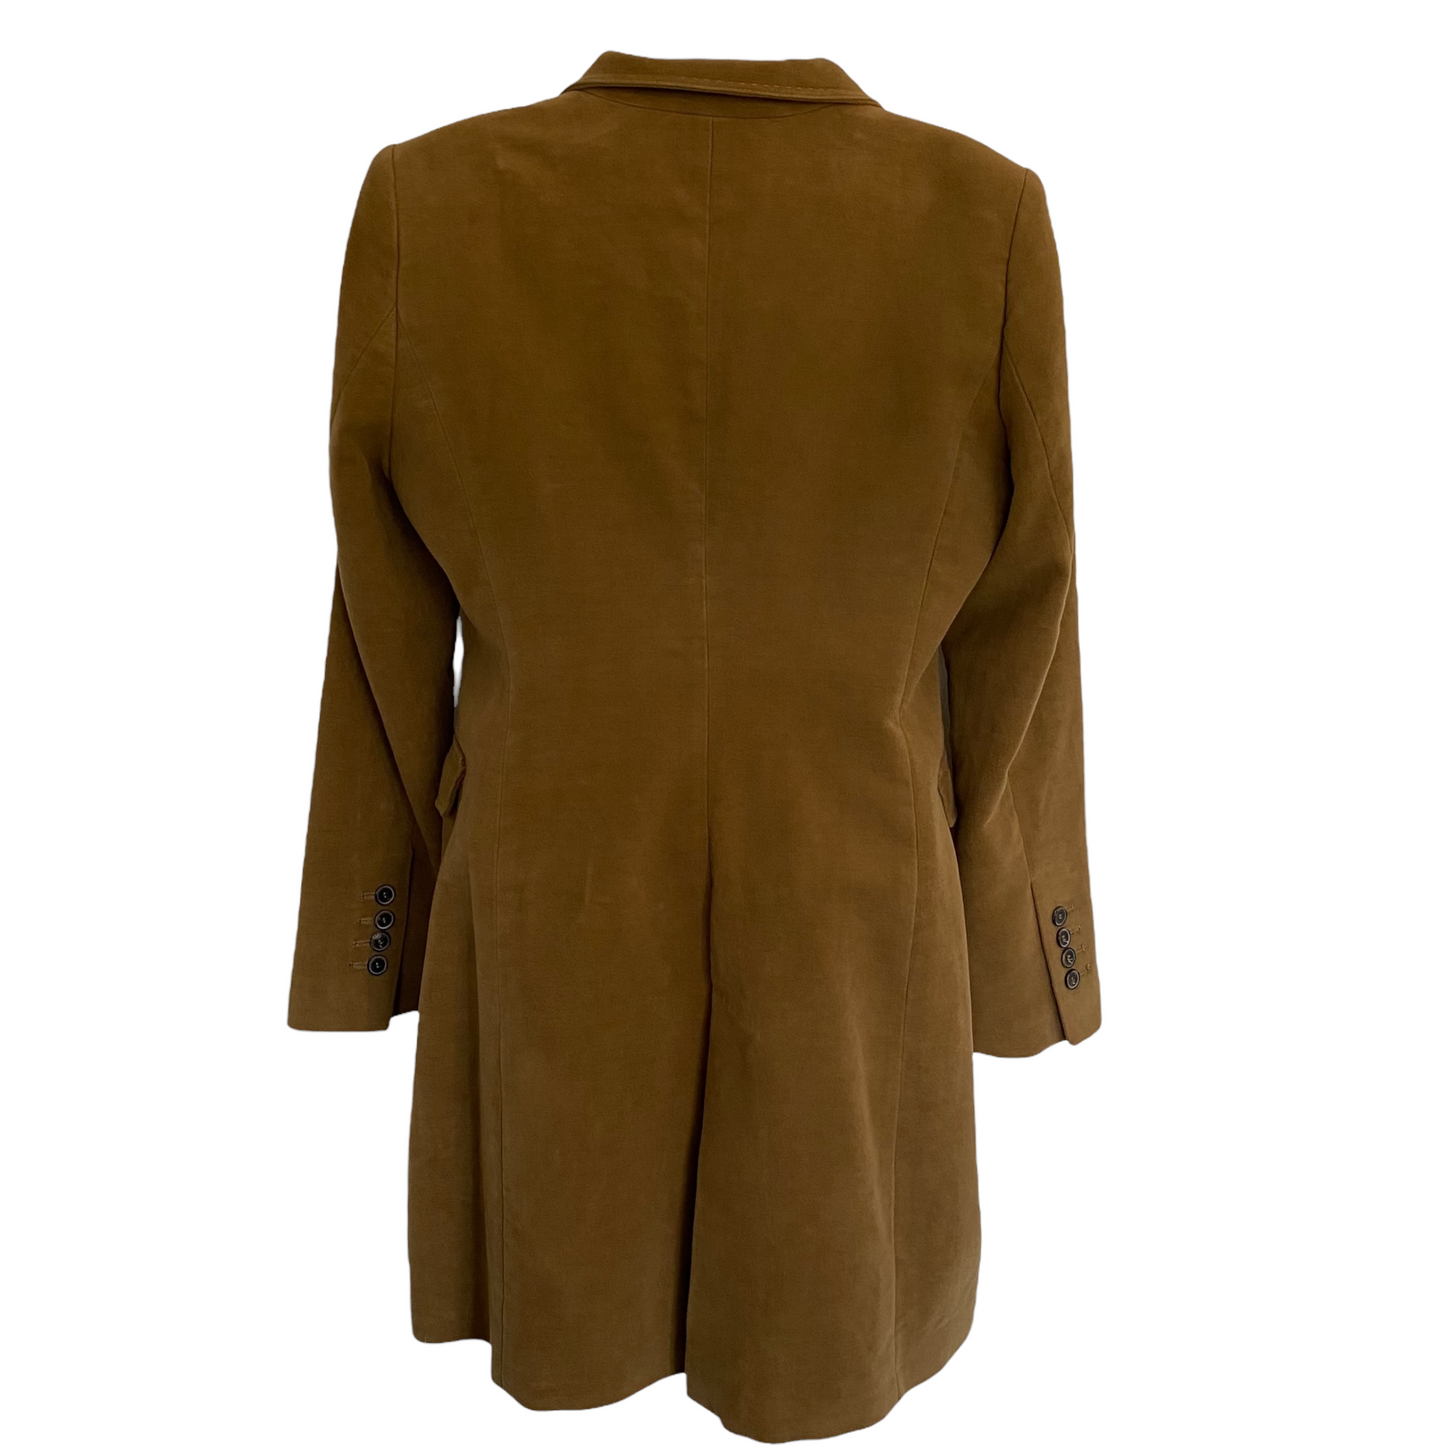 Zara Woman Camel Coat Size Large